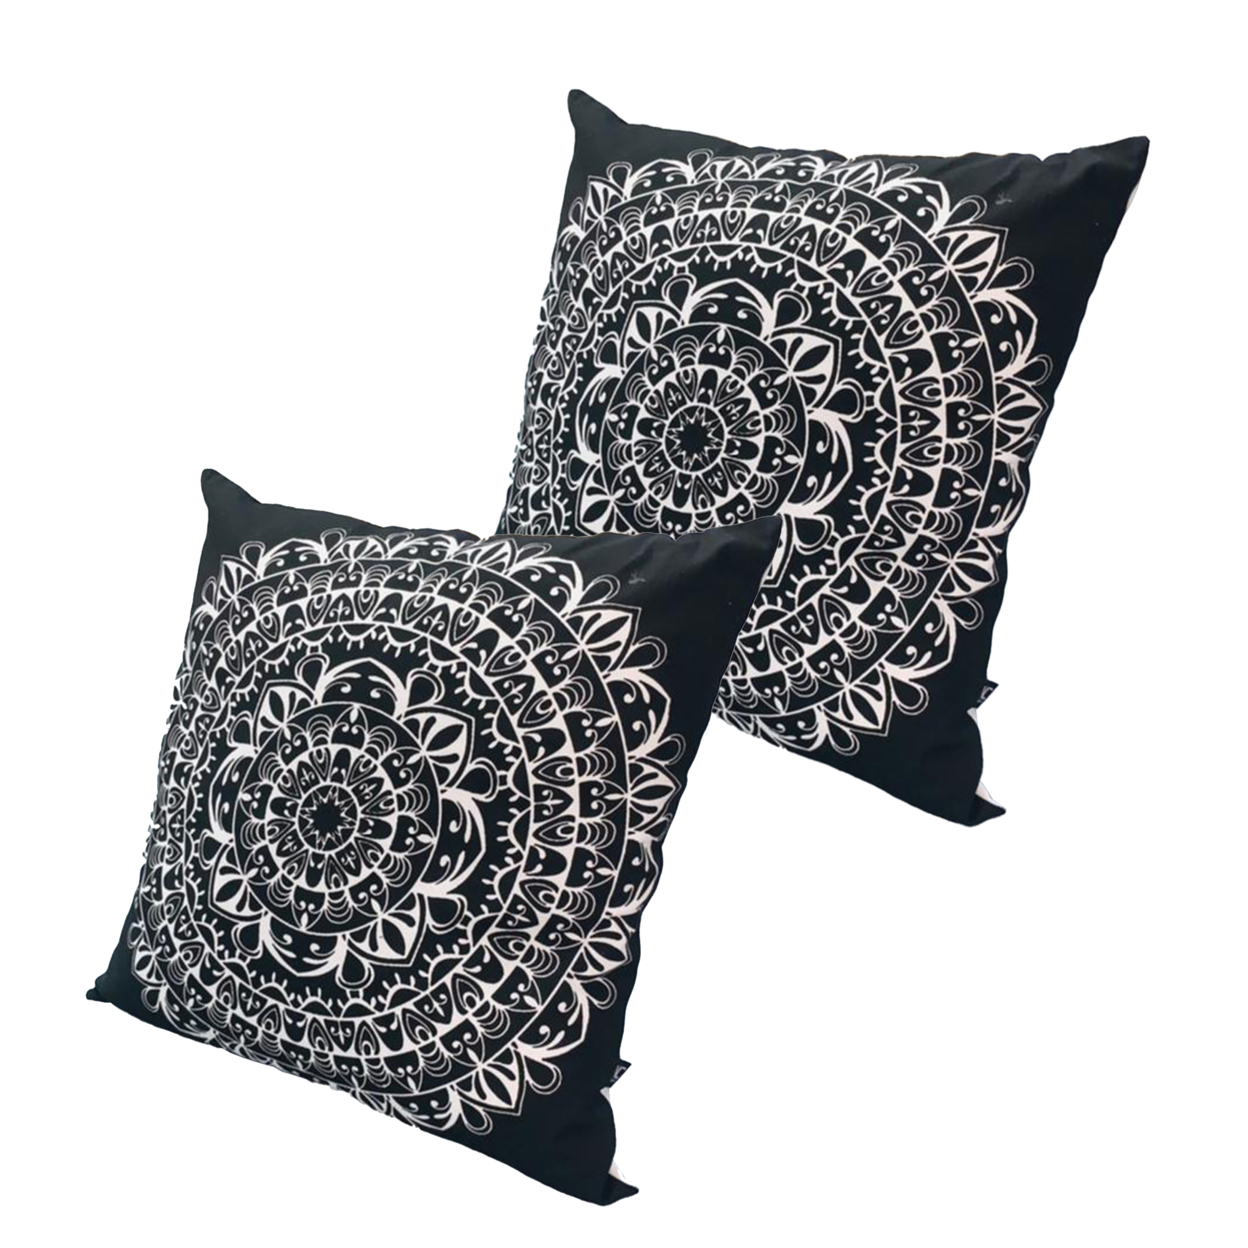 20 X 20 Square Cotton Accent Throw Pillows, Mandala Pattern, Set Of 2, Black, White